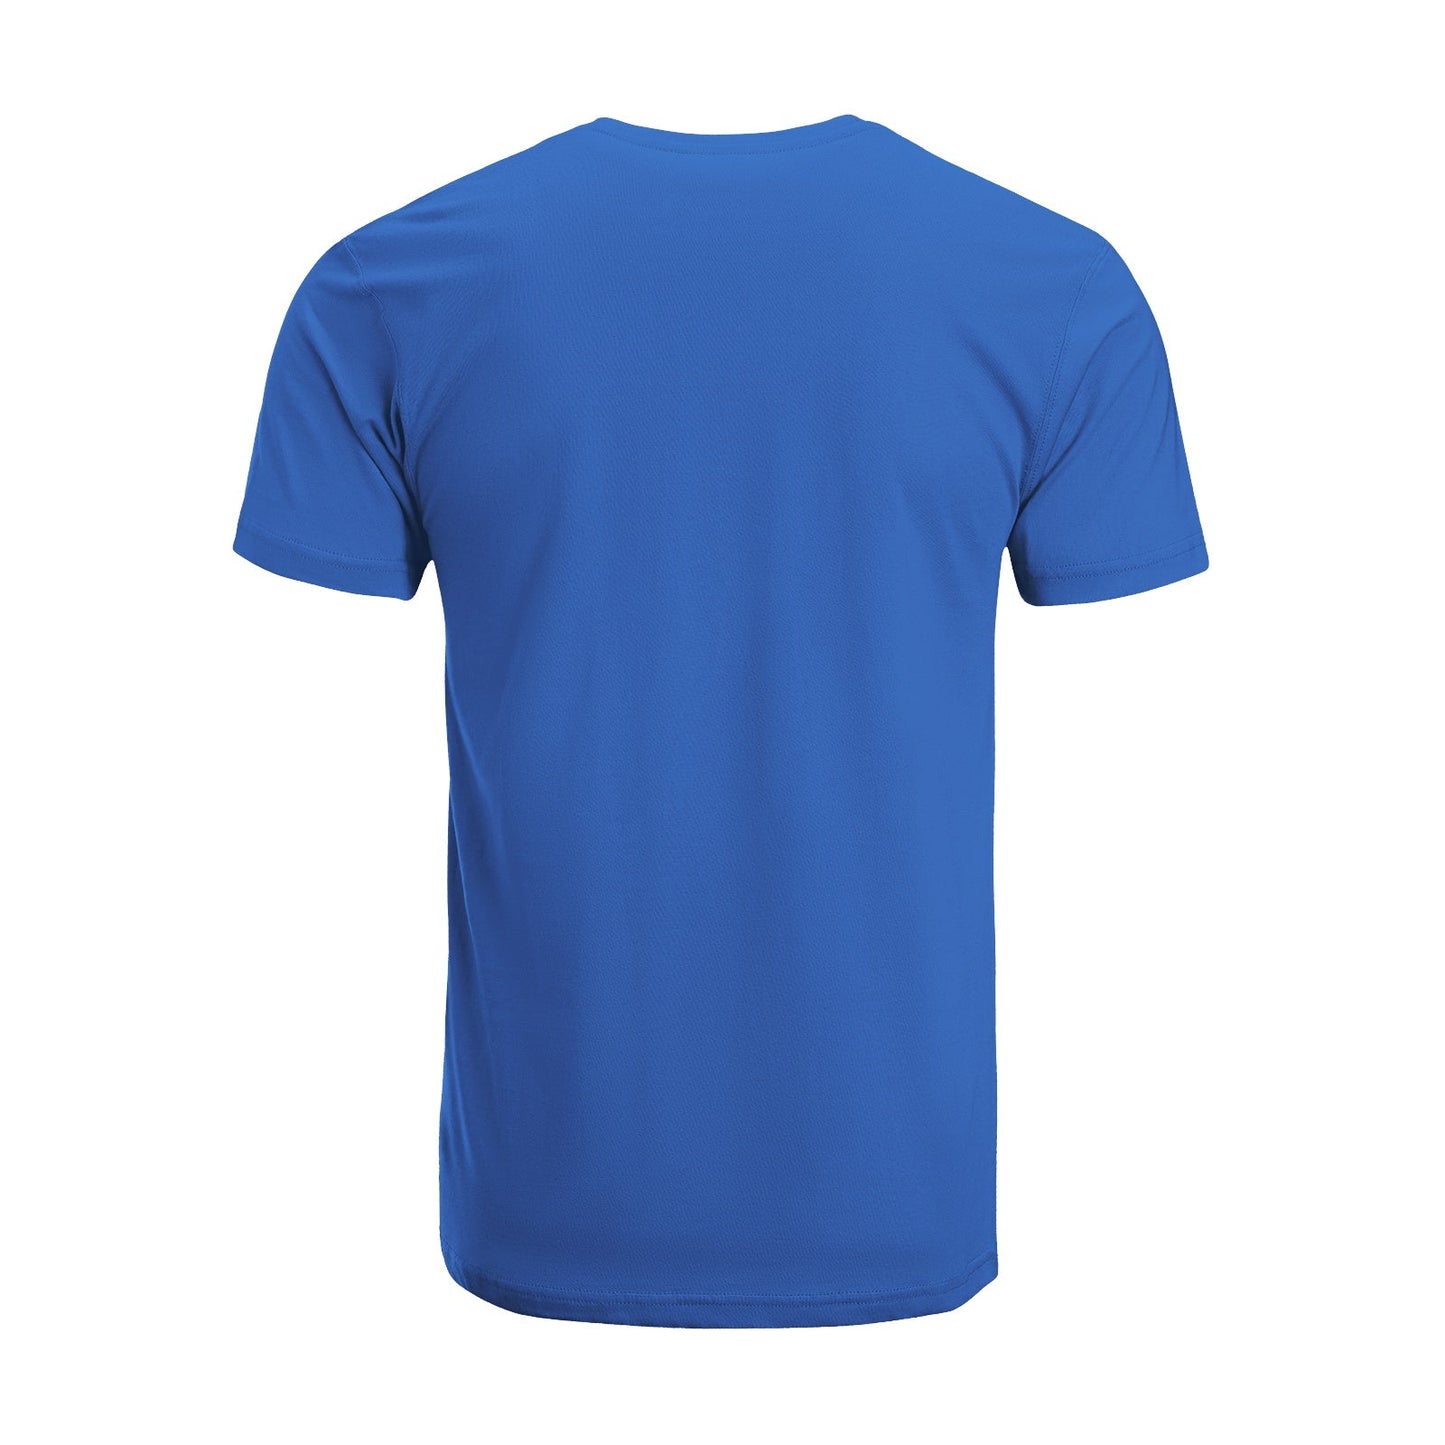 Unisex Short Sleeve Crew Neck Cotton Jersey T-Shirt VEGAN 16